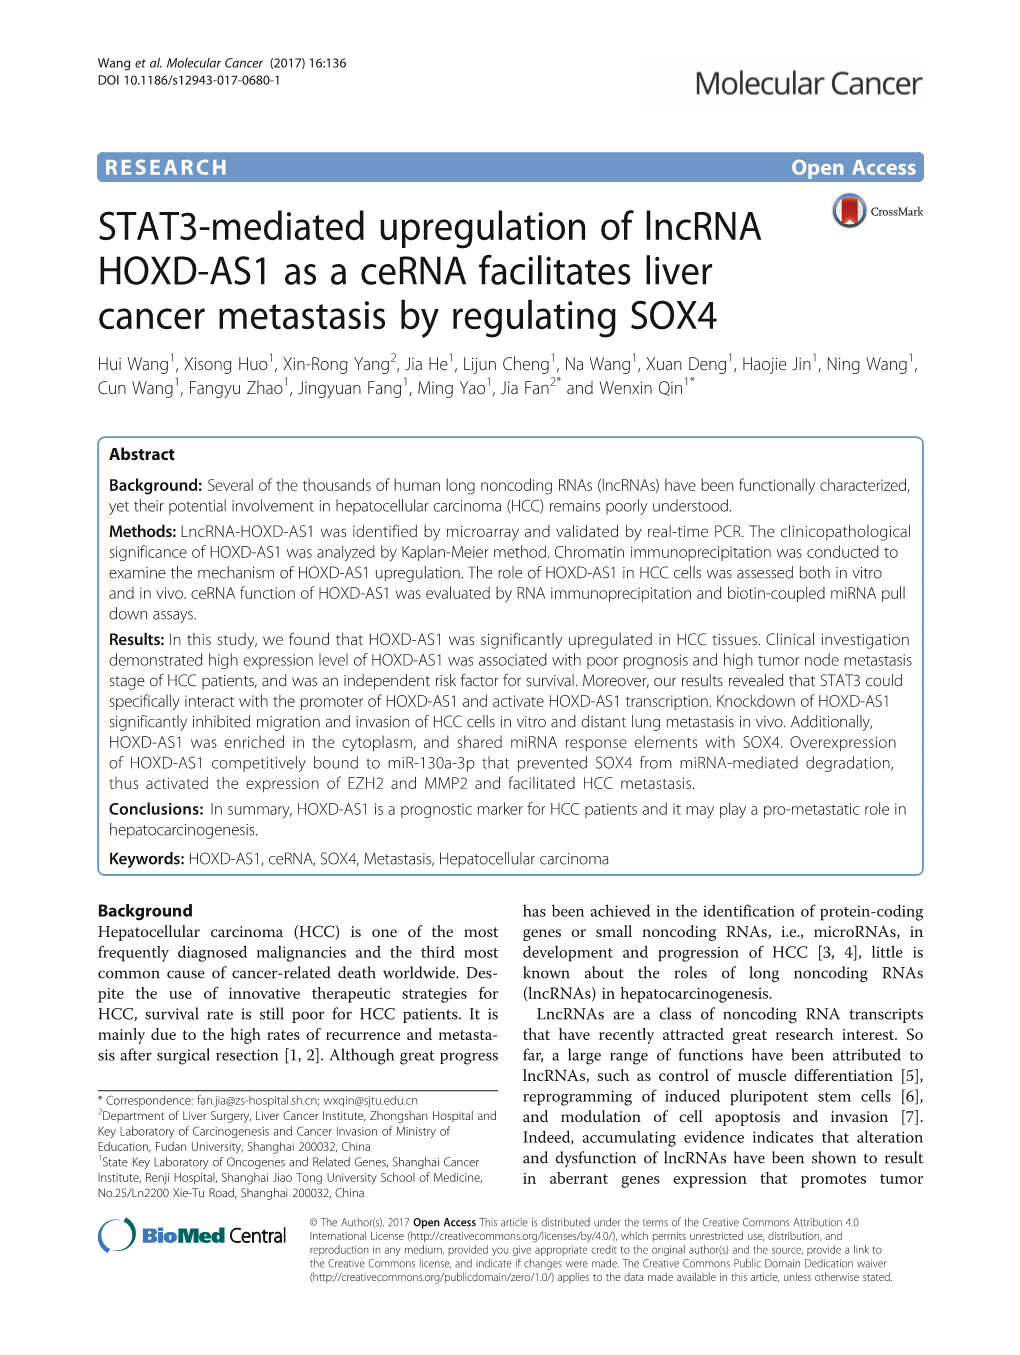 STAT3-Mediated Upregulation of Lncrna HOXD-AS1 As a Cerna